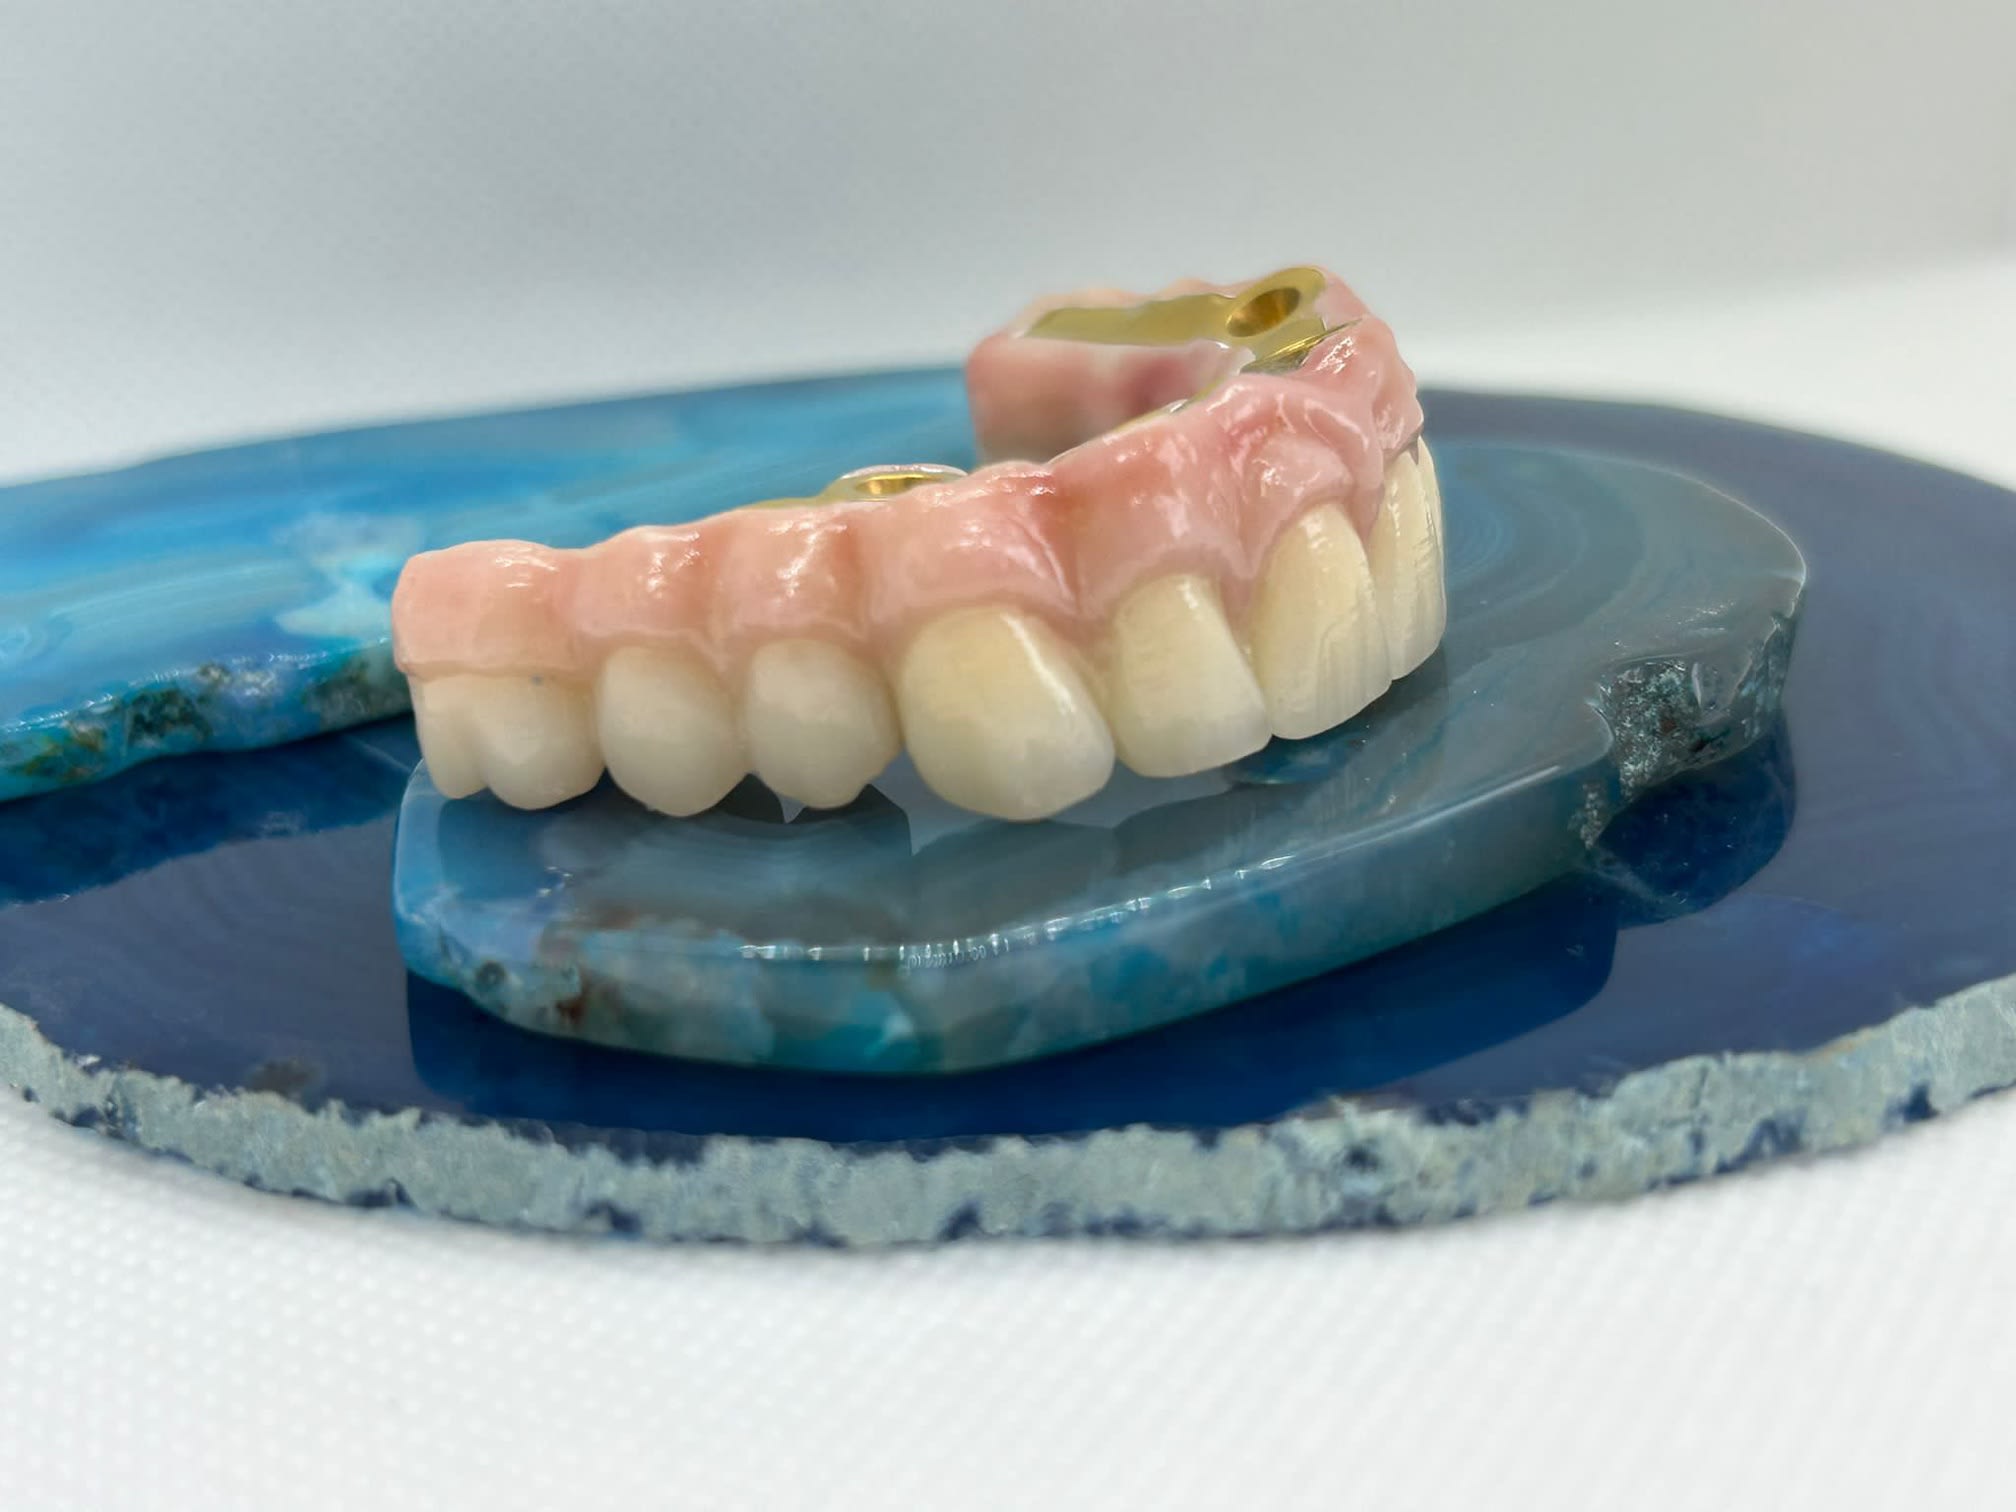 Images Steve Butler Dental Ceramics Ltd